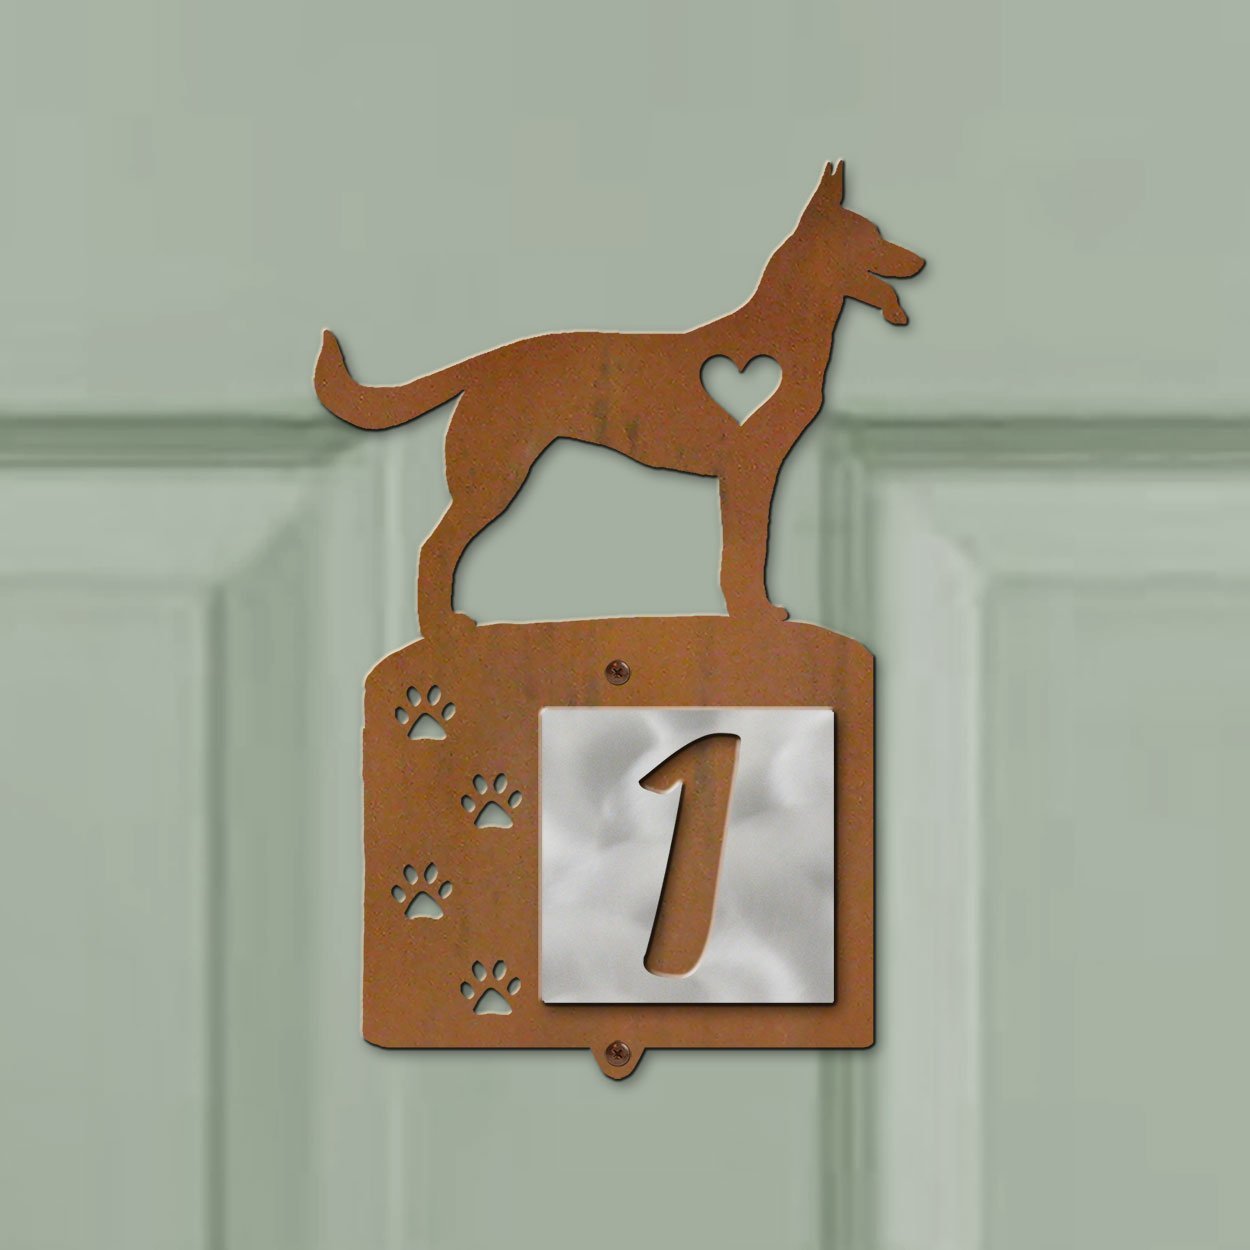 606221 - German Shepherd Nose Prints One-Digit Rustic Tile Door Number